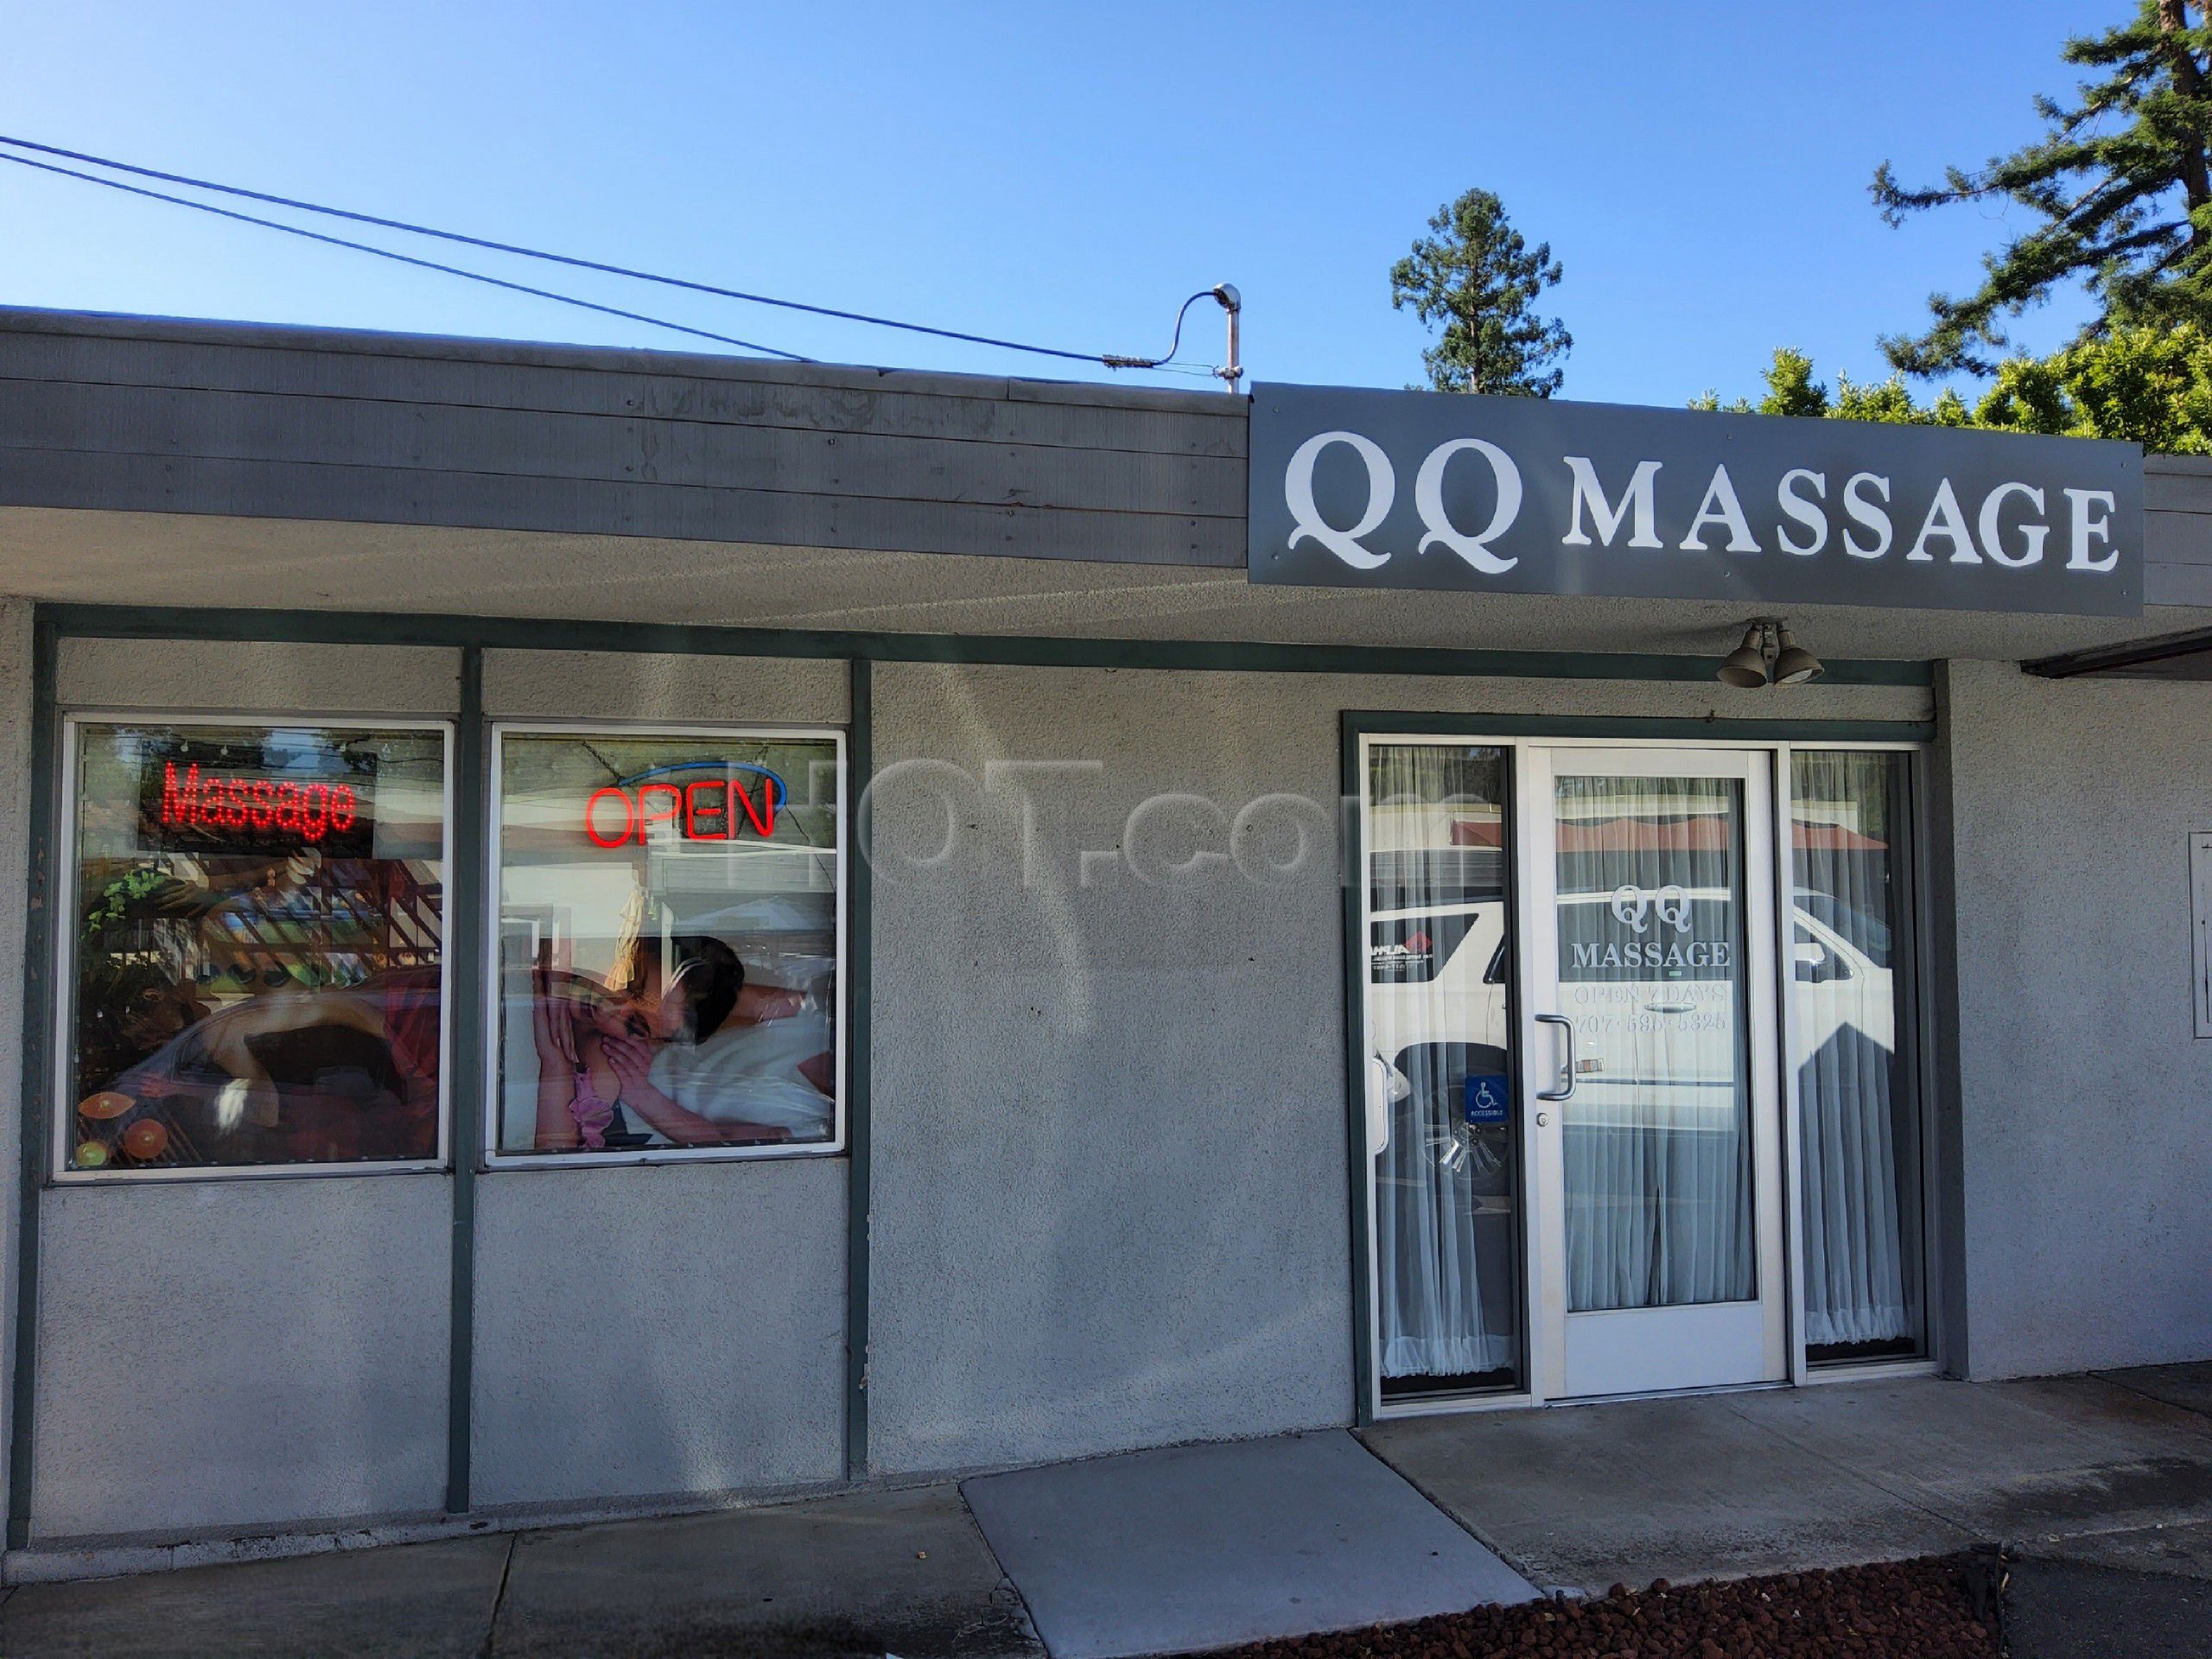 Santa Rosa, California Qq Massage